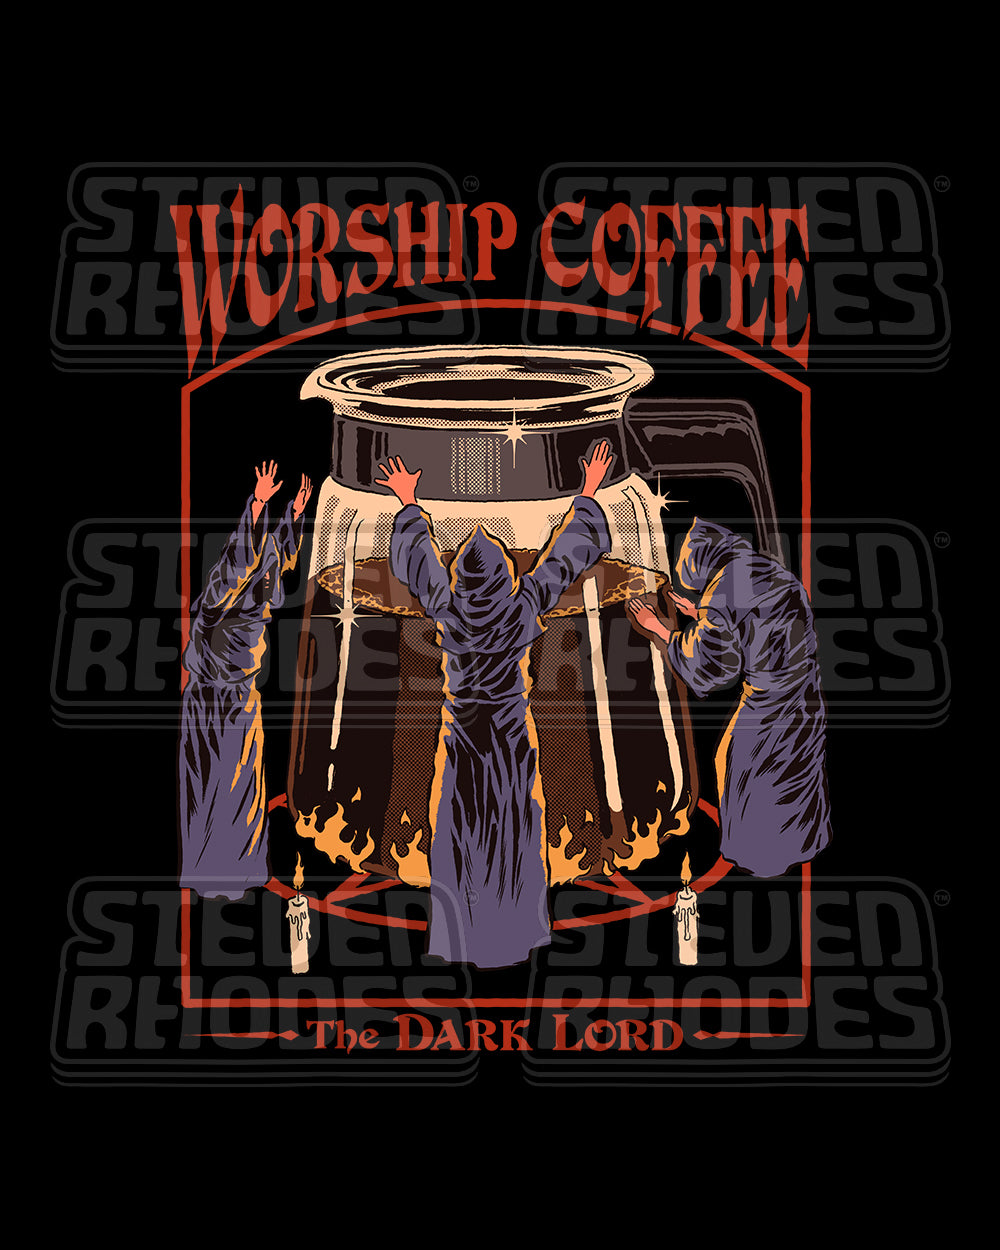 Worship Coffee Sweater Australia Online #colour_black